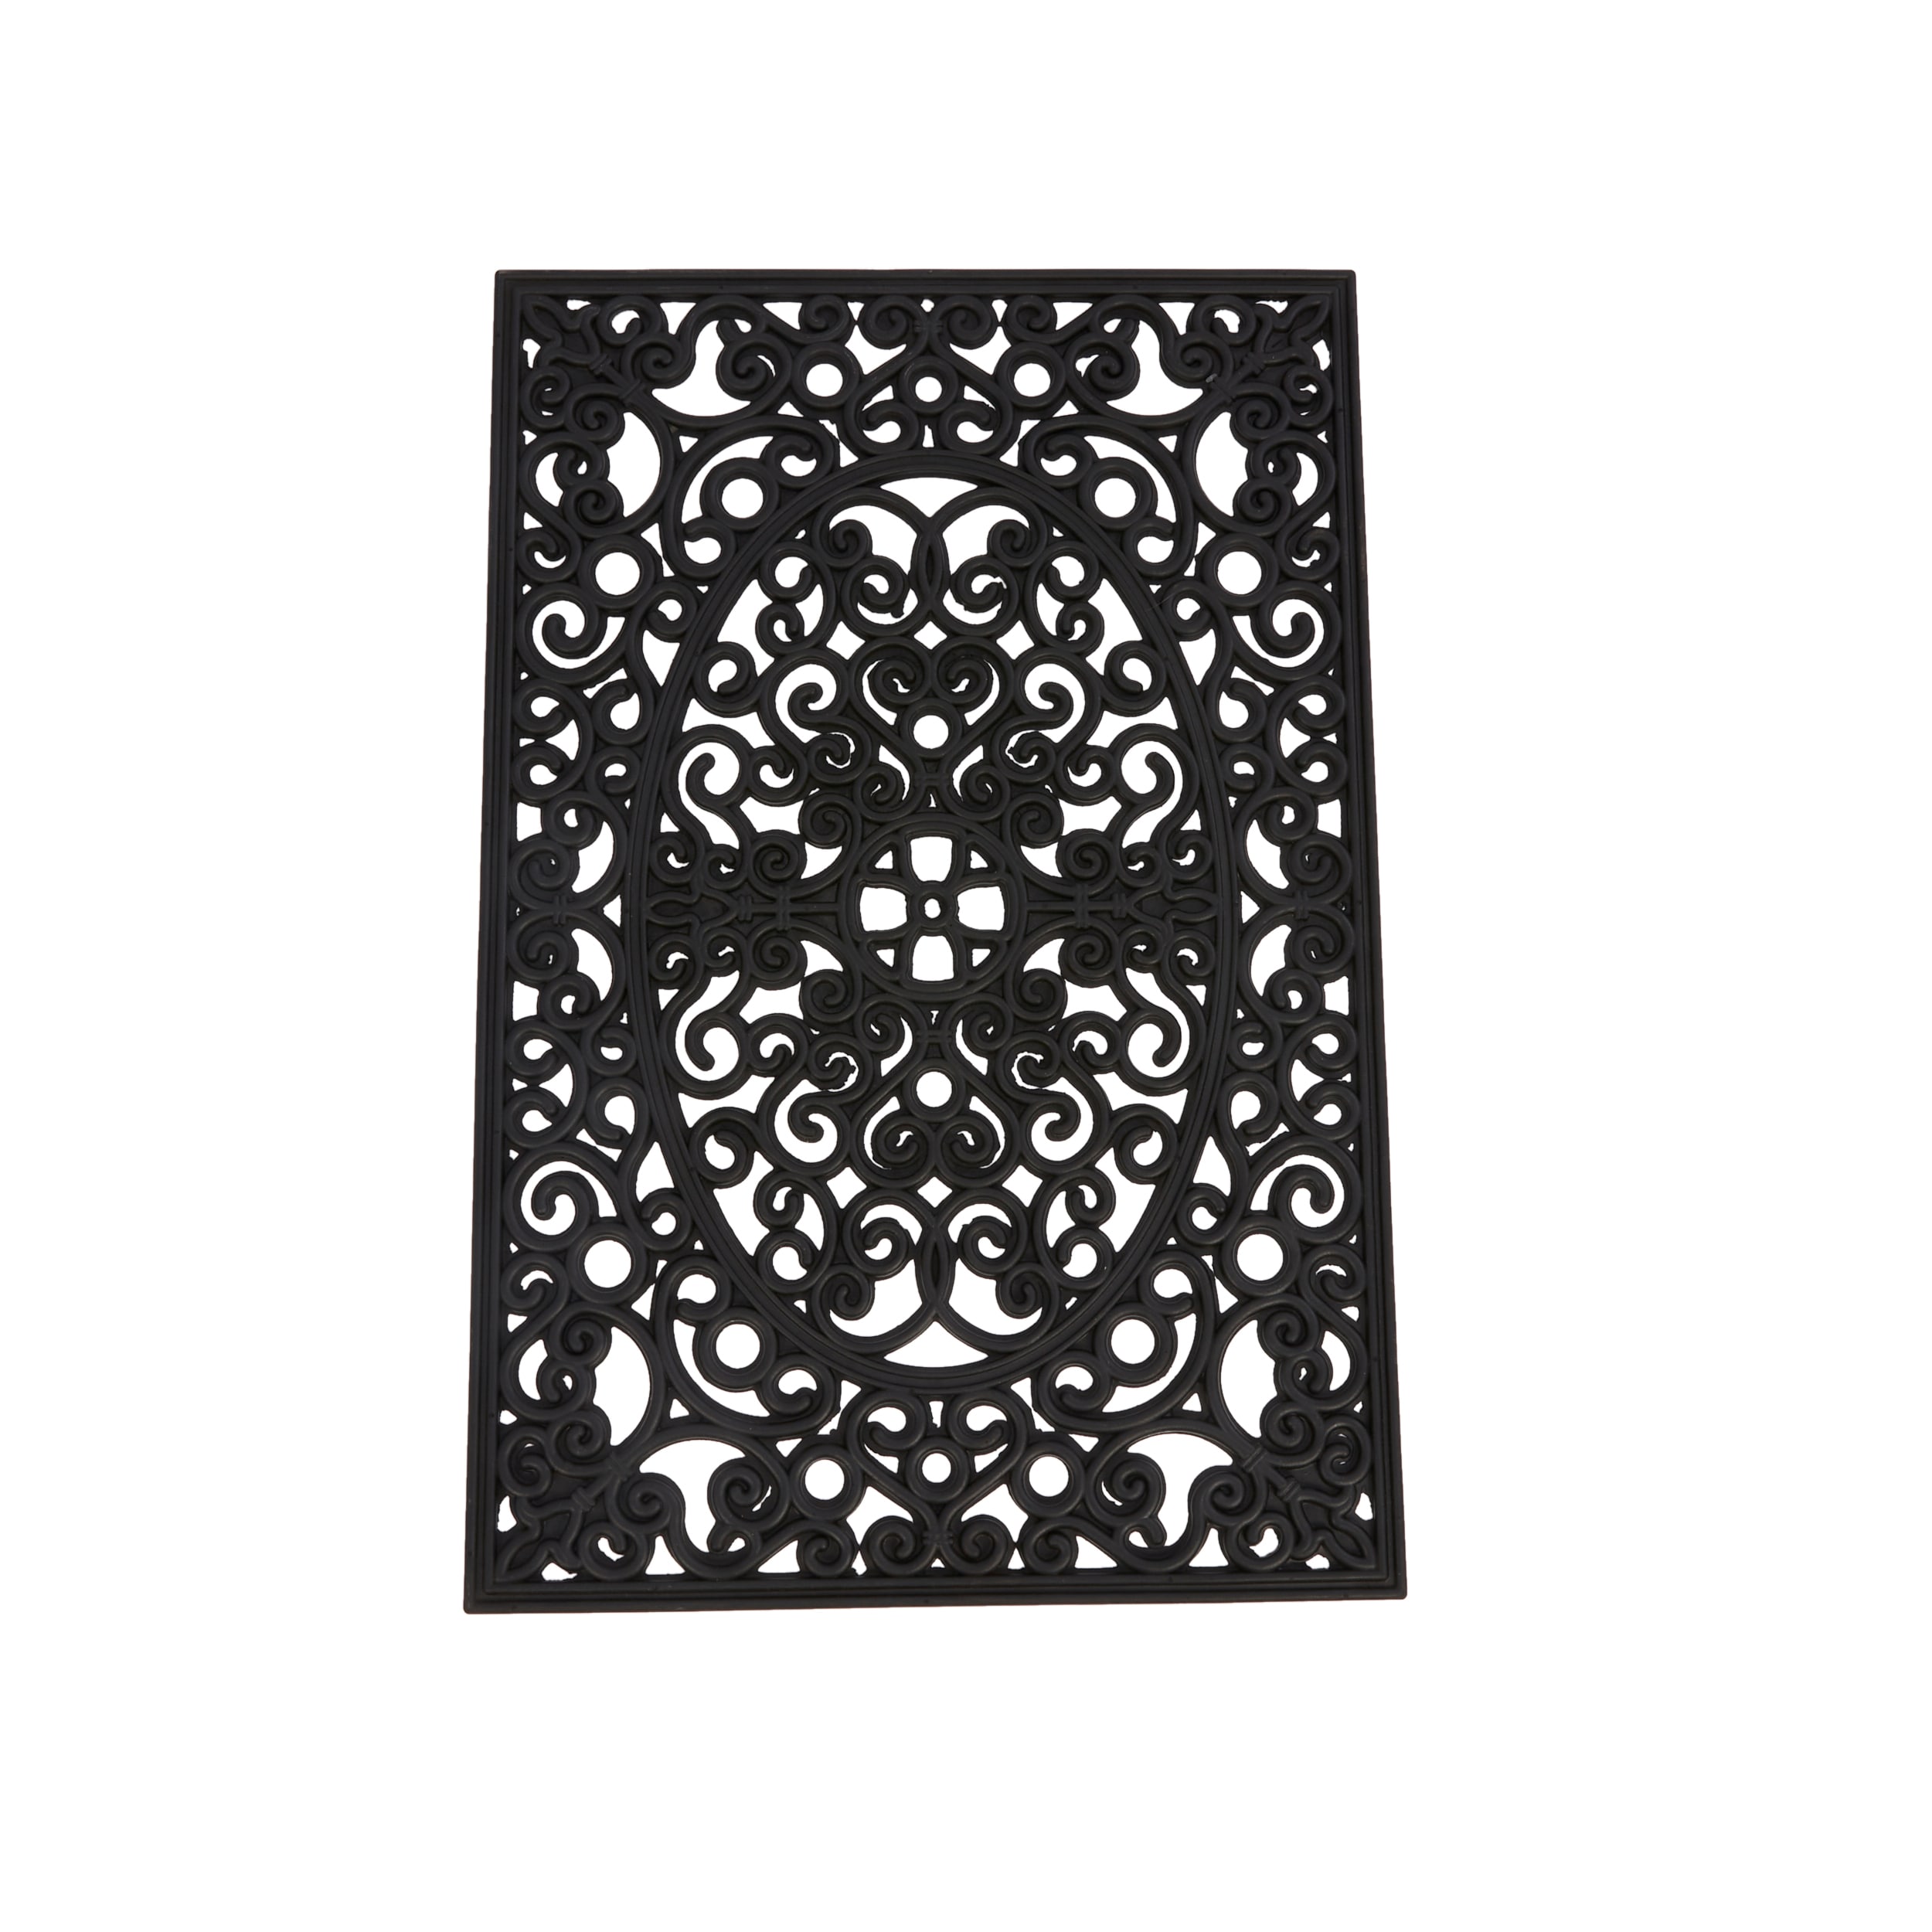 Black Plastic Abstract Pattern 2 x 3 Feet AntiSkid Door Mat by @home